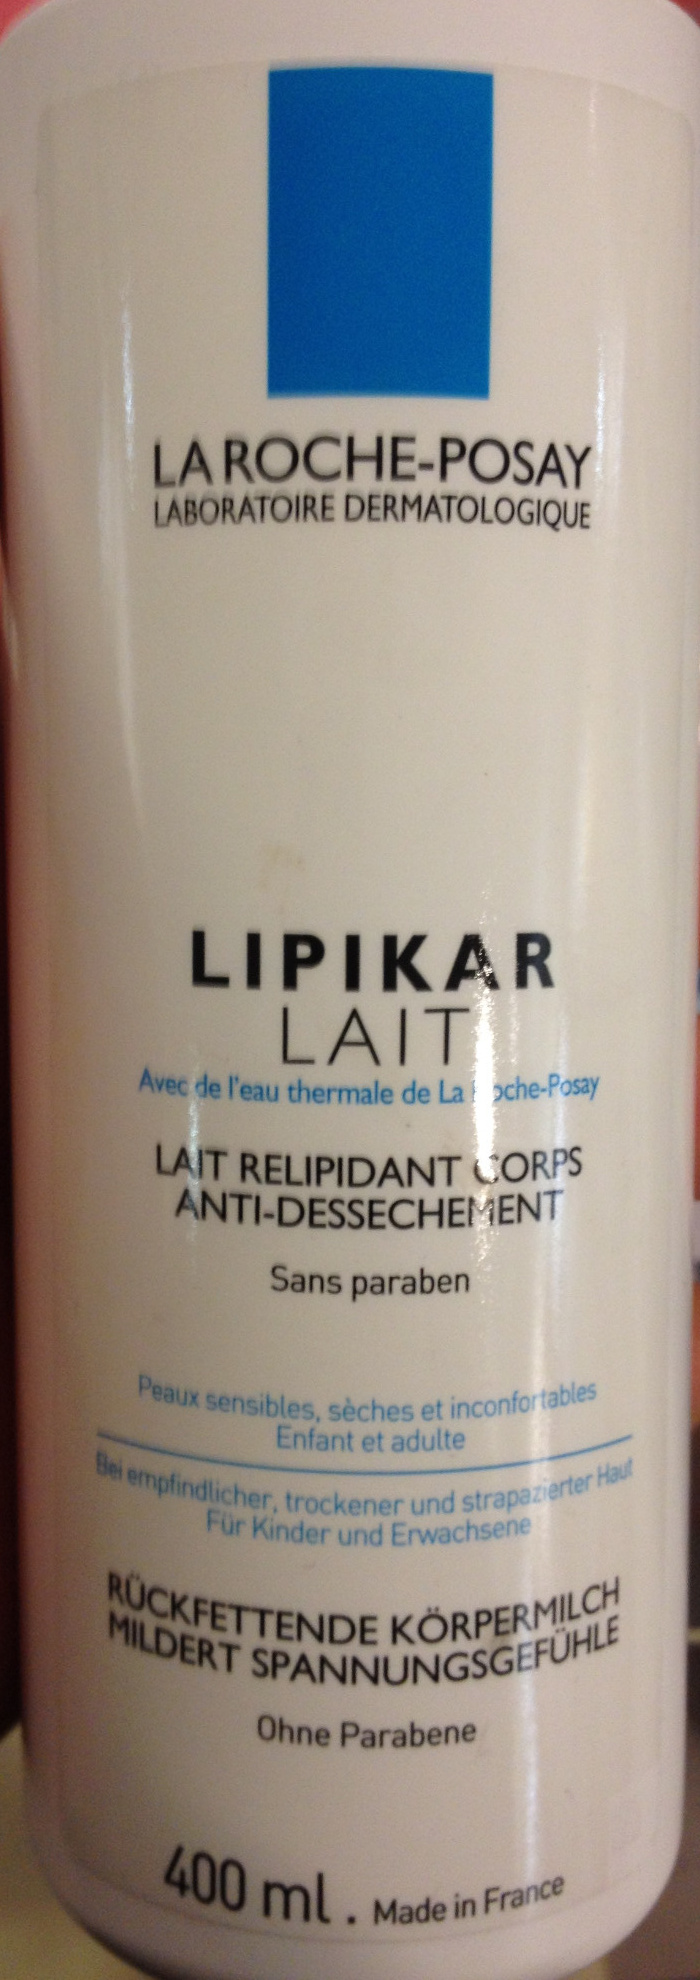 Lipikar Lait - Produit - fr